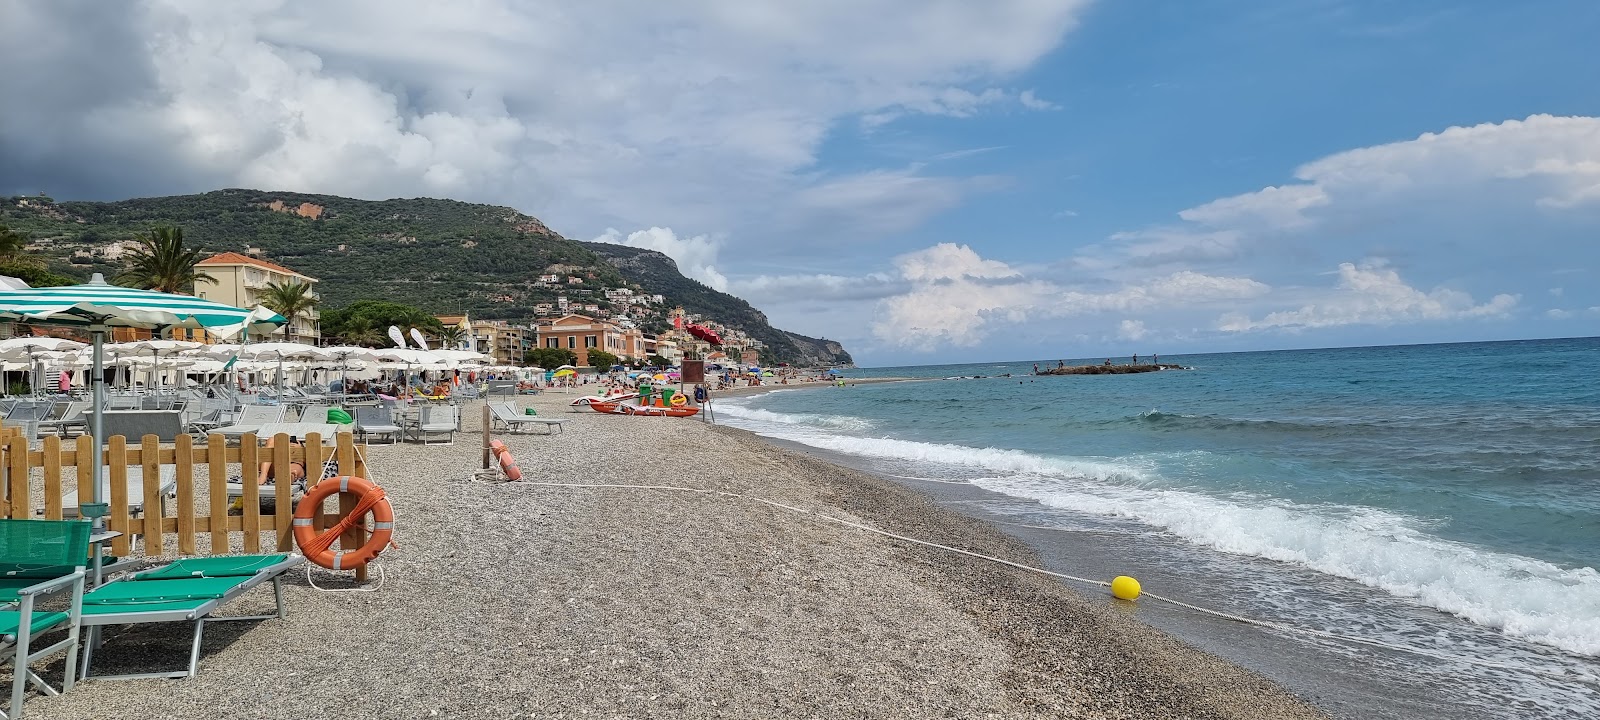 Foto van Spiaggia di Borgio strandresortgebied